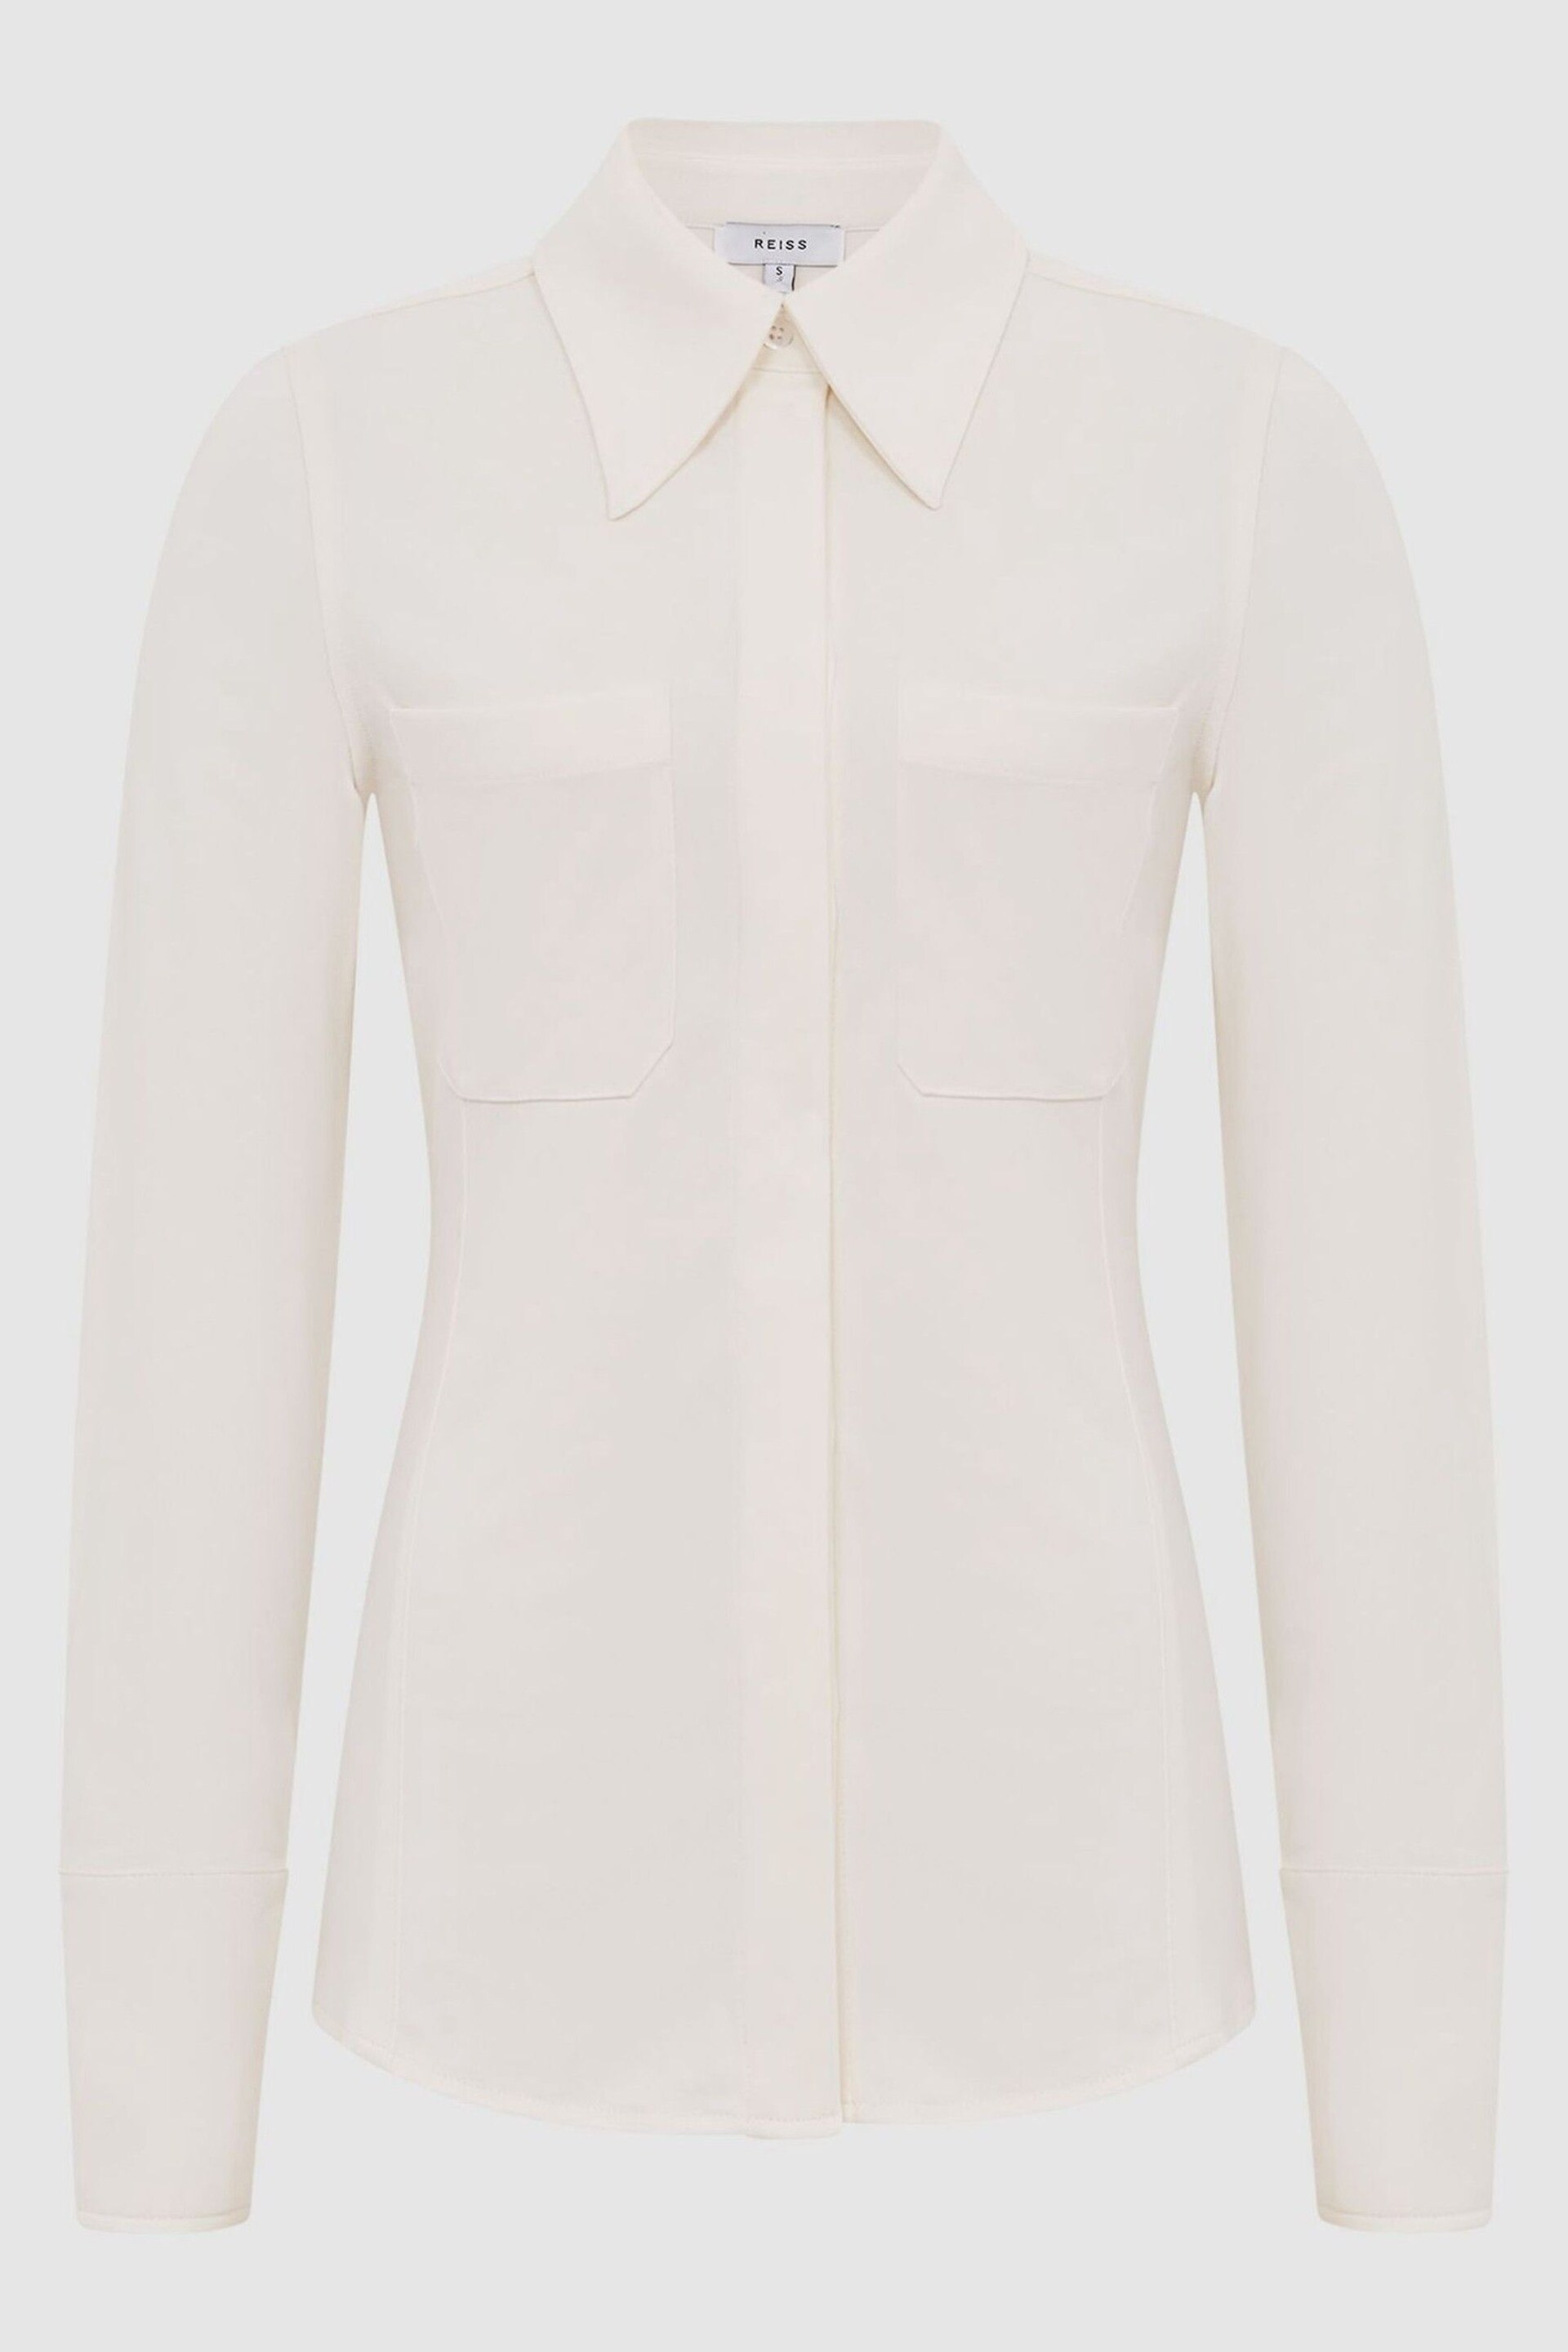 Reiss Ivory Billie Long Sleeve Jersey Shirt - Image 2 of 7